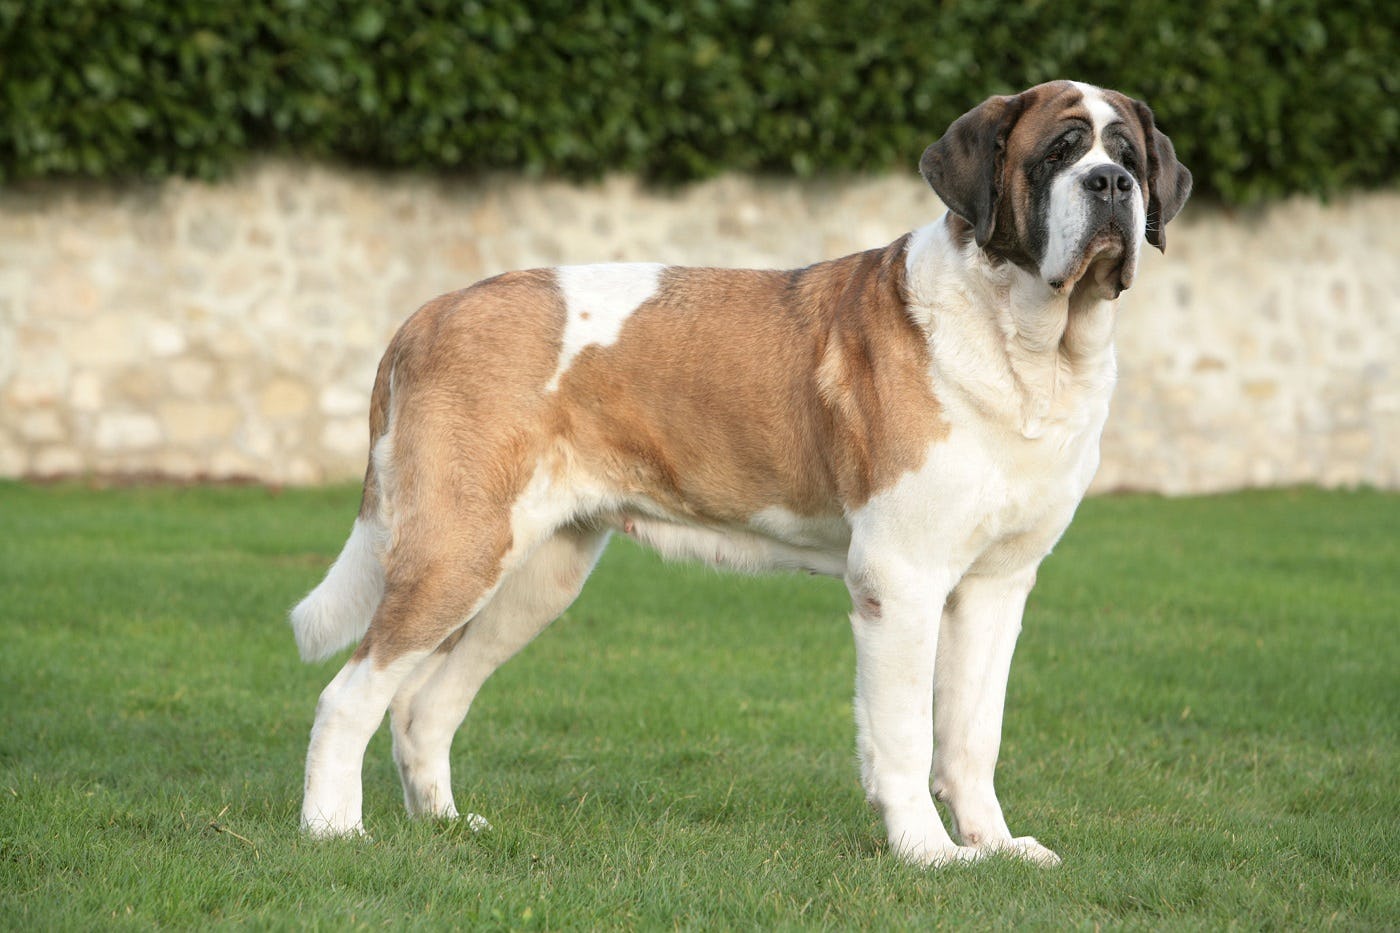 Secondary image of Saint Bernard dog breed